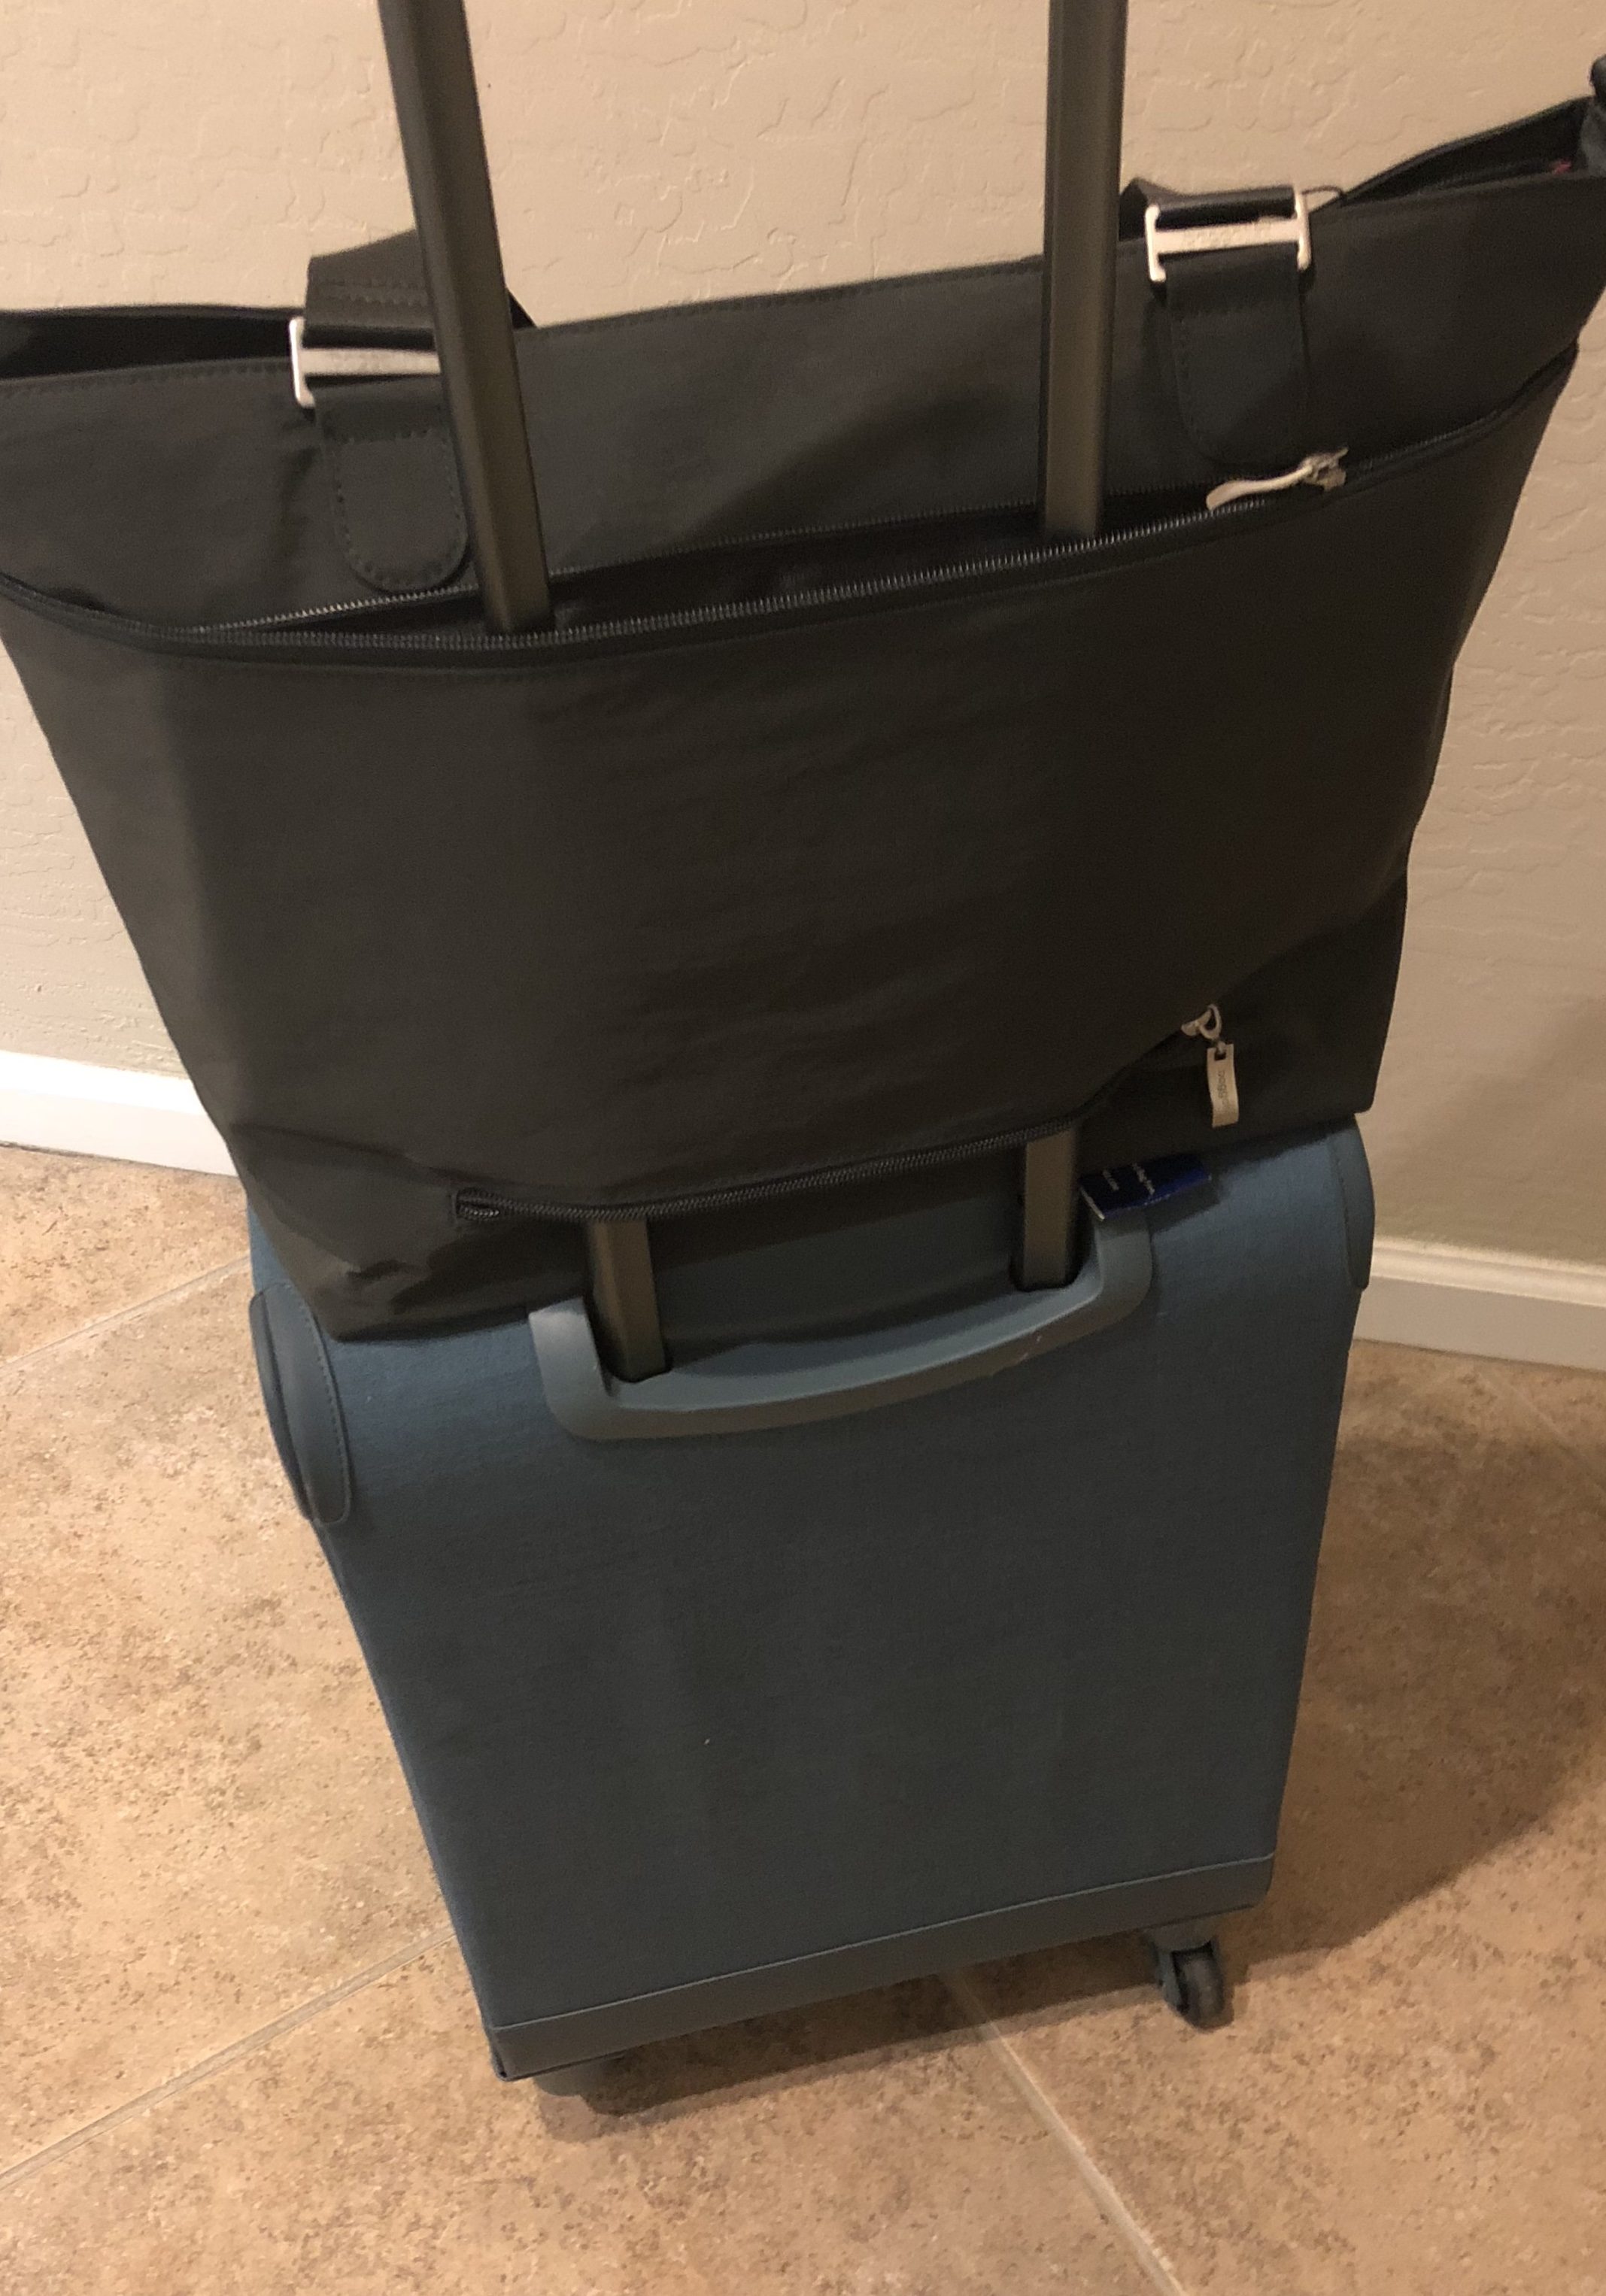 Baggallini tote over suitcase – Exploring the Prime